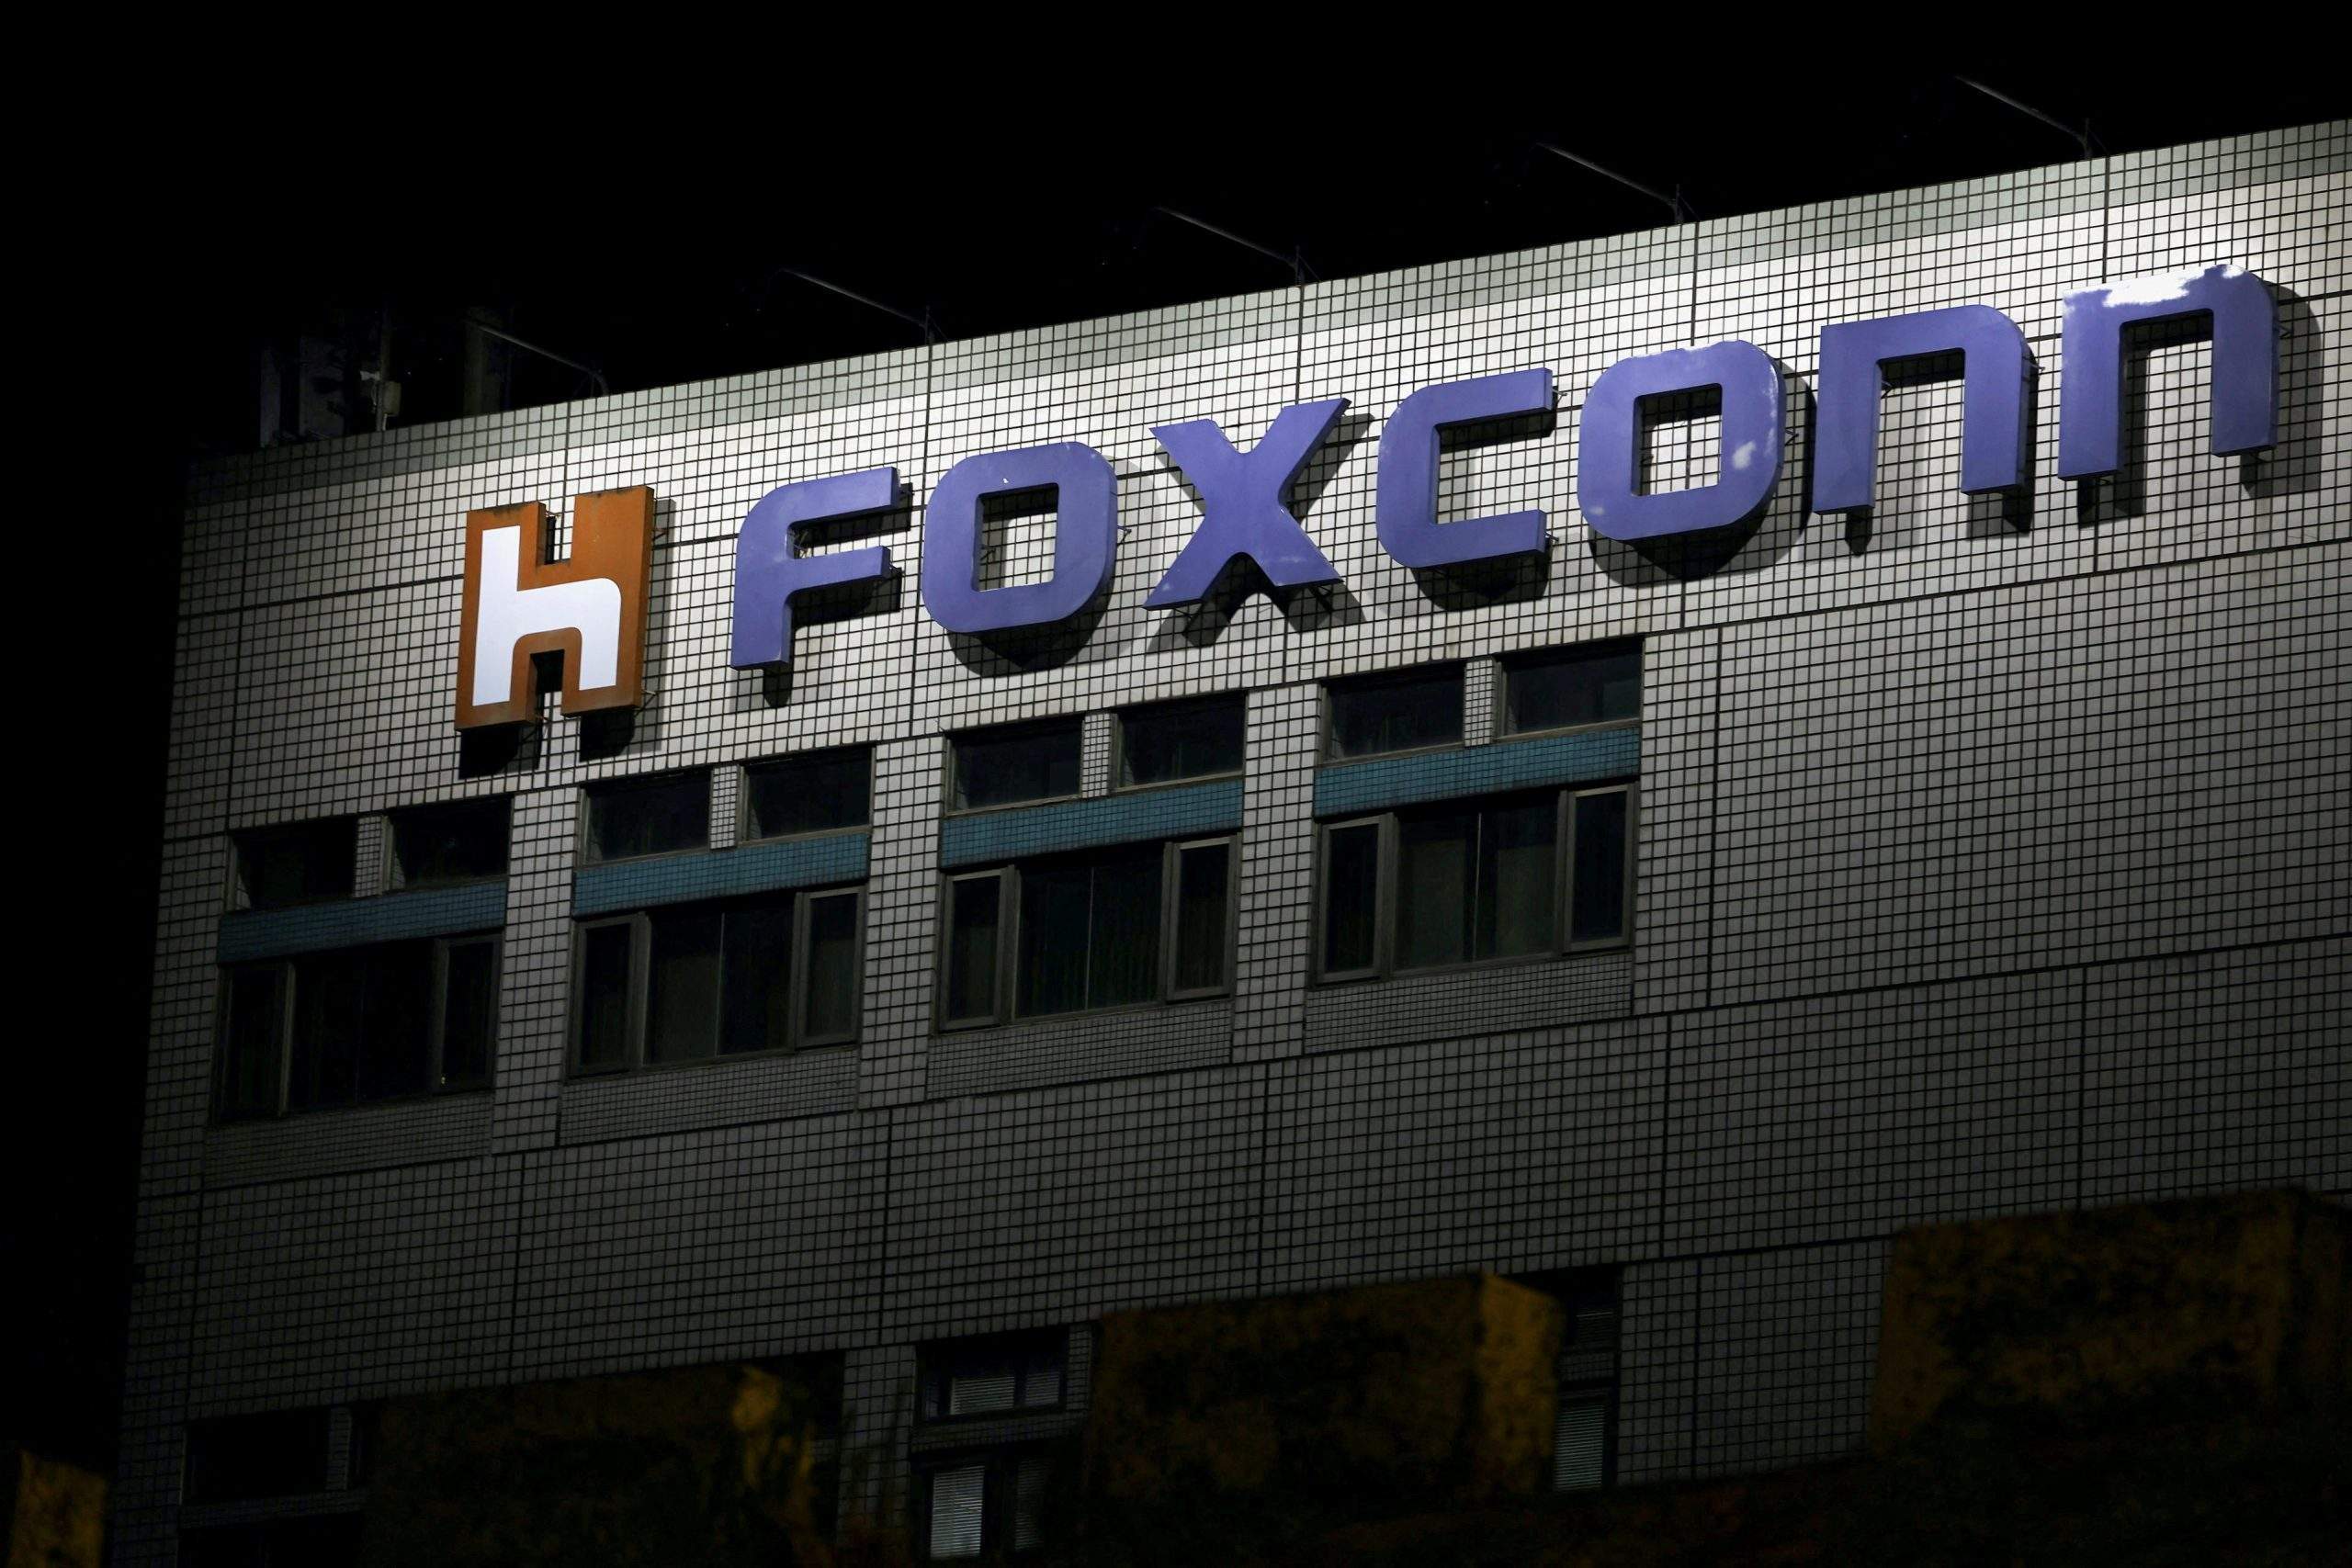 کارخانه فاکسکان - foxconn factory